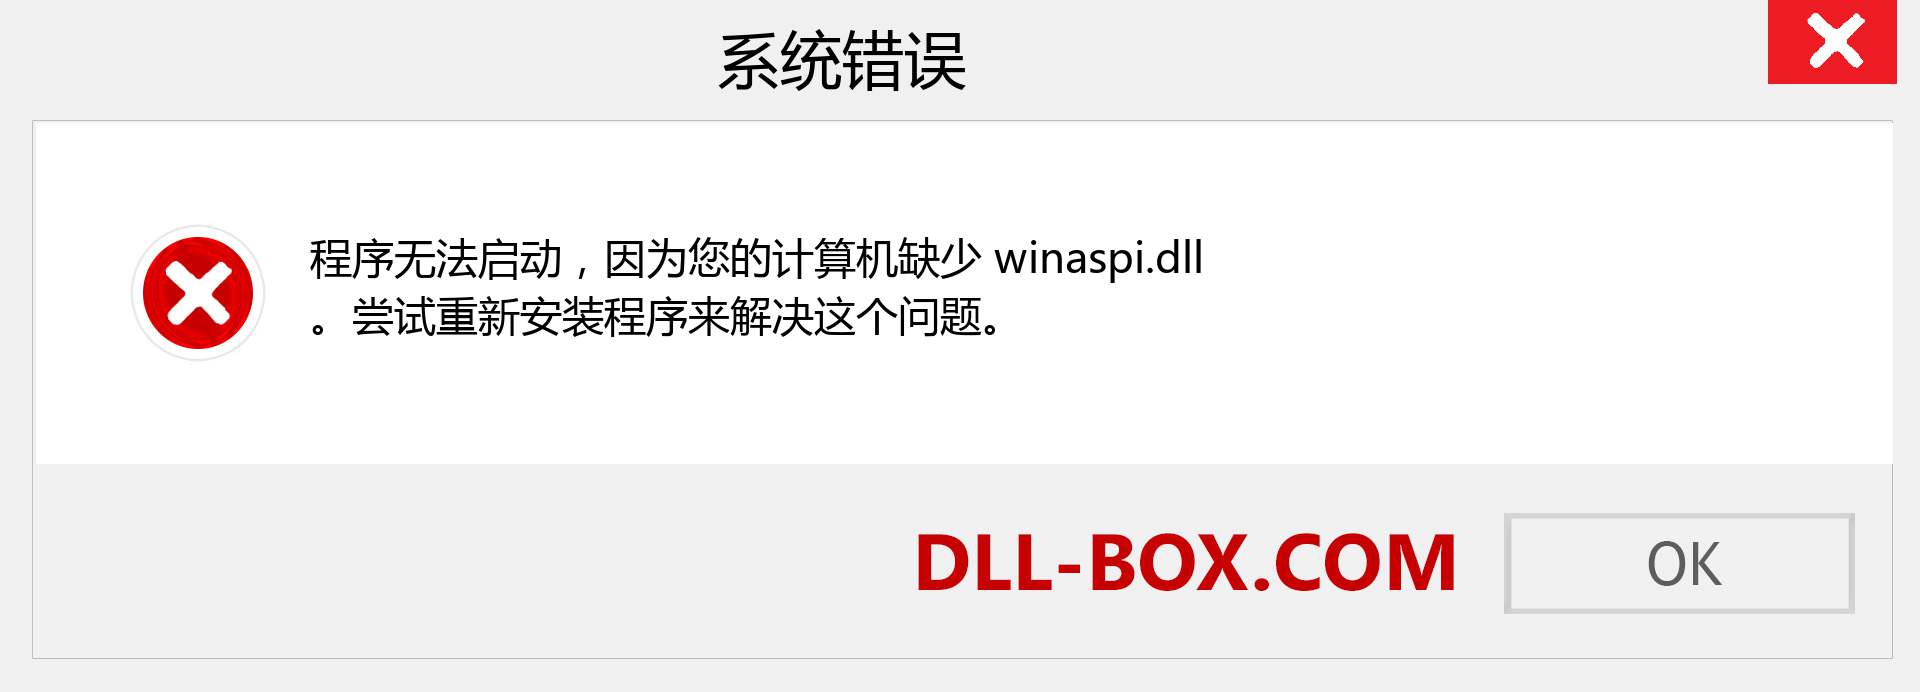 winaspi.dll 文件丢失？。 适用于 Windows 7、8、10 的下载 - 修复 Windows、照片、图像上的 winaspi dll 丢失错误